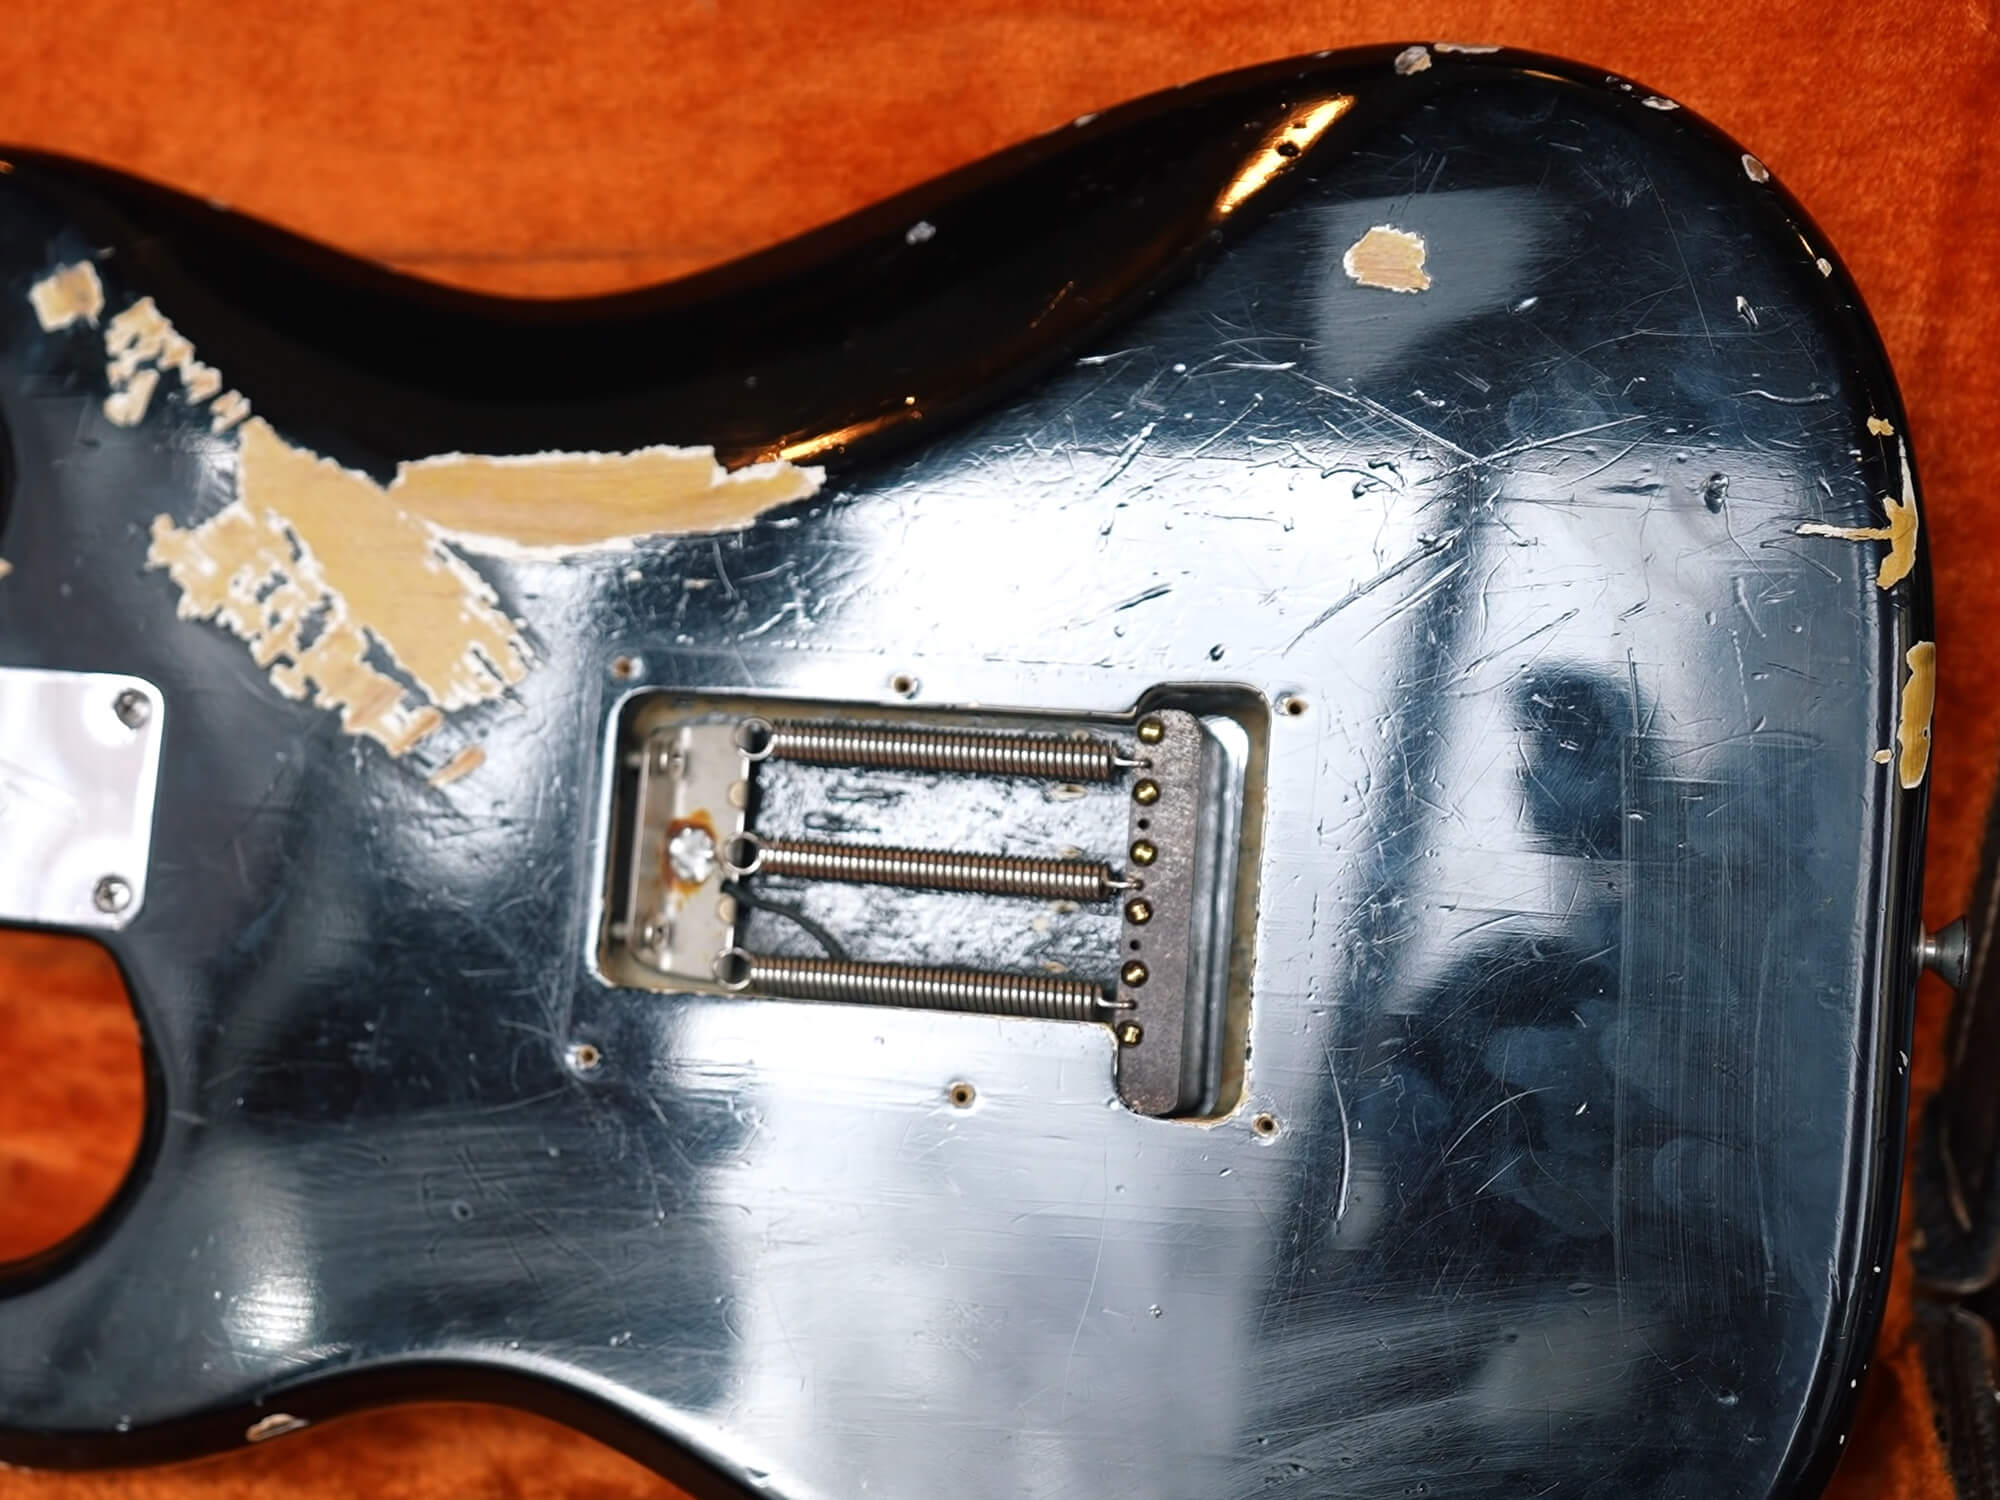 Paul Davids' Stratocaster footage